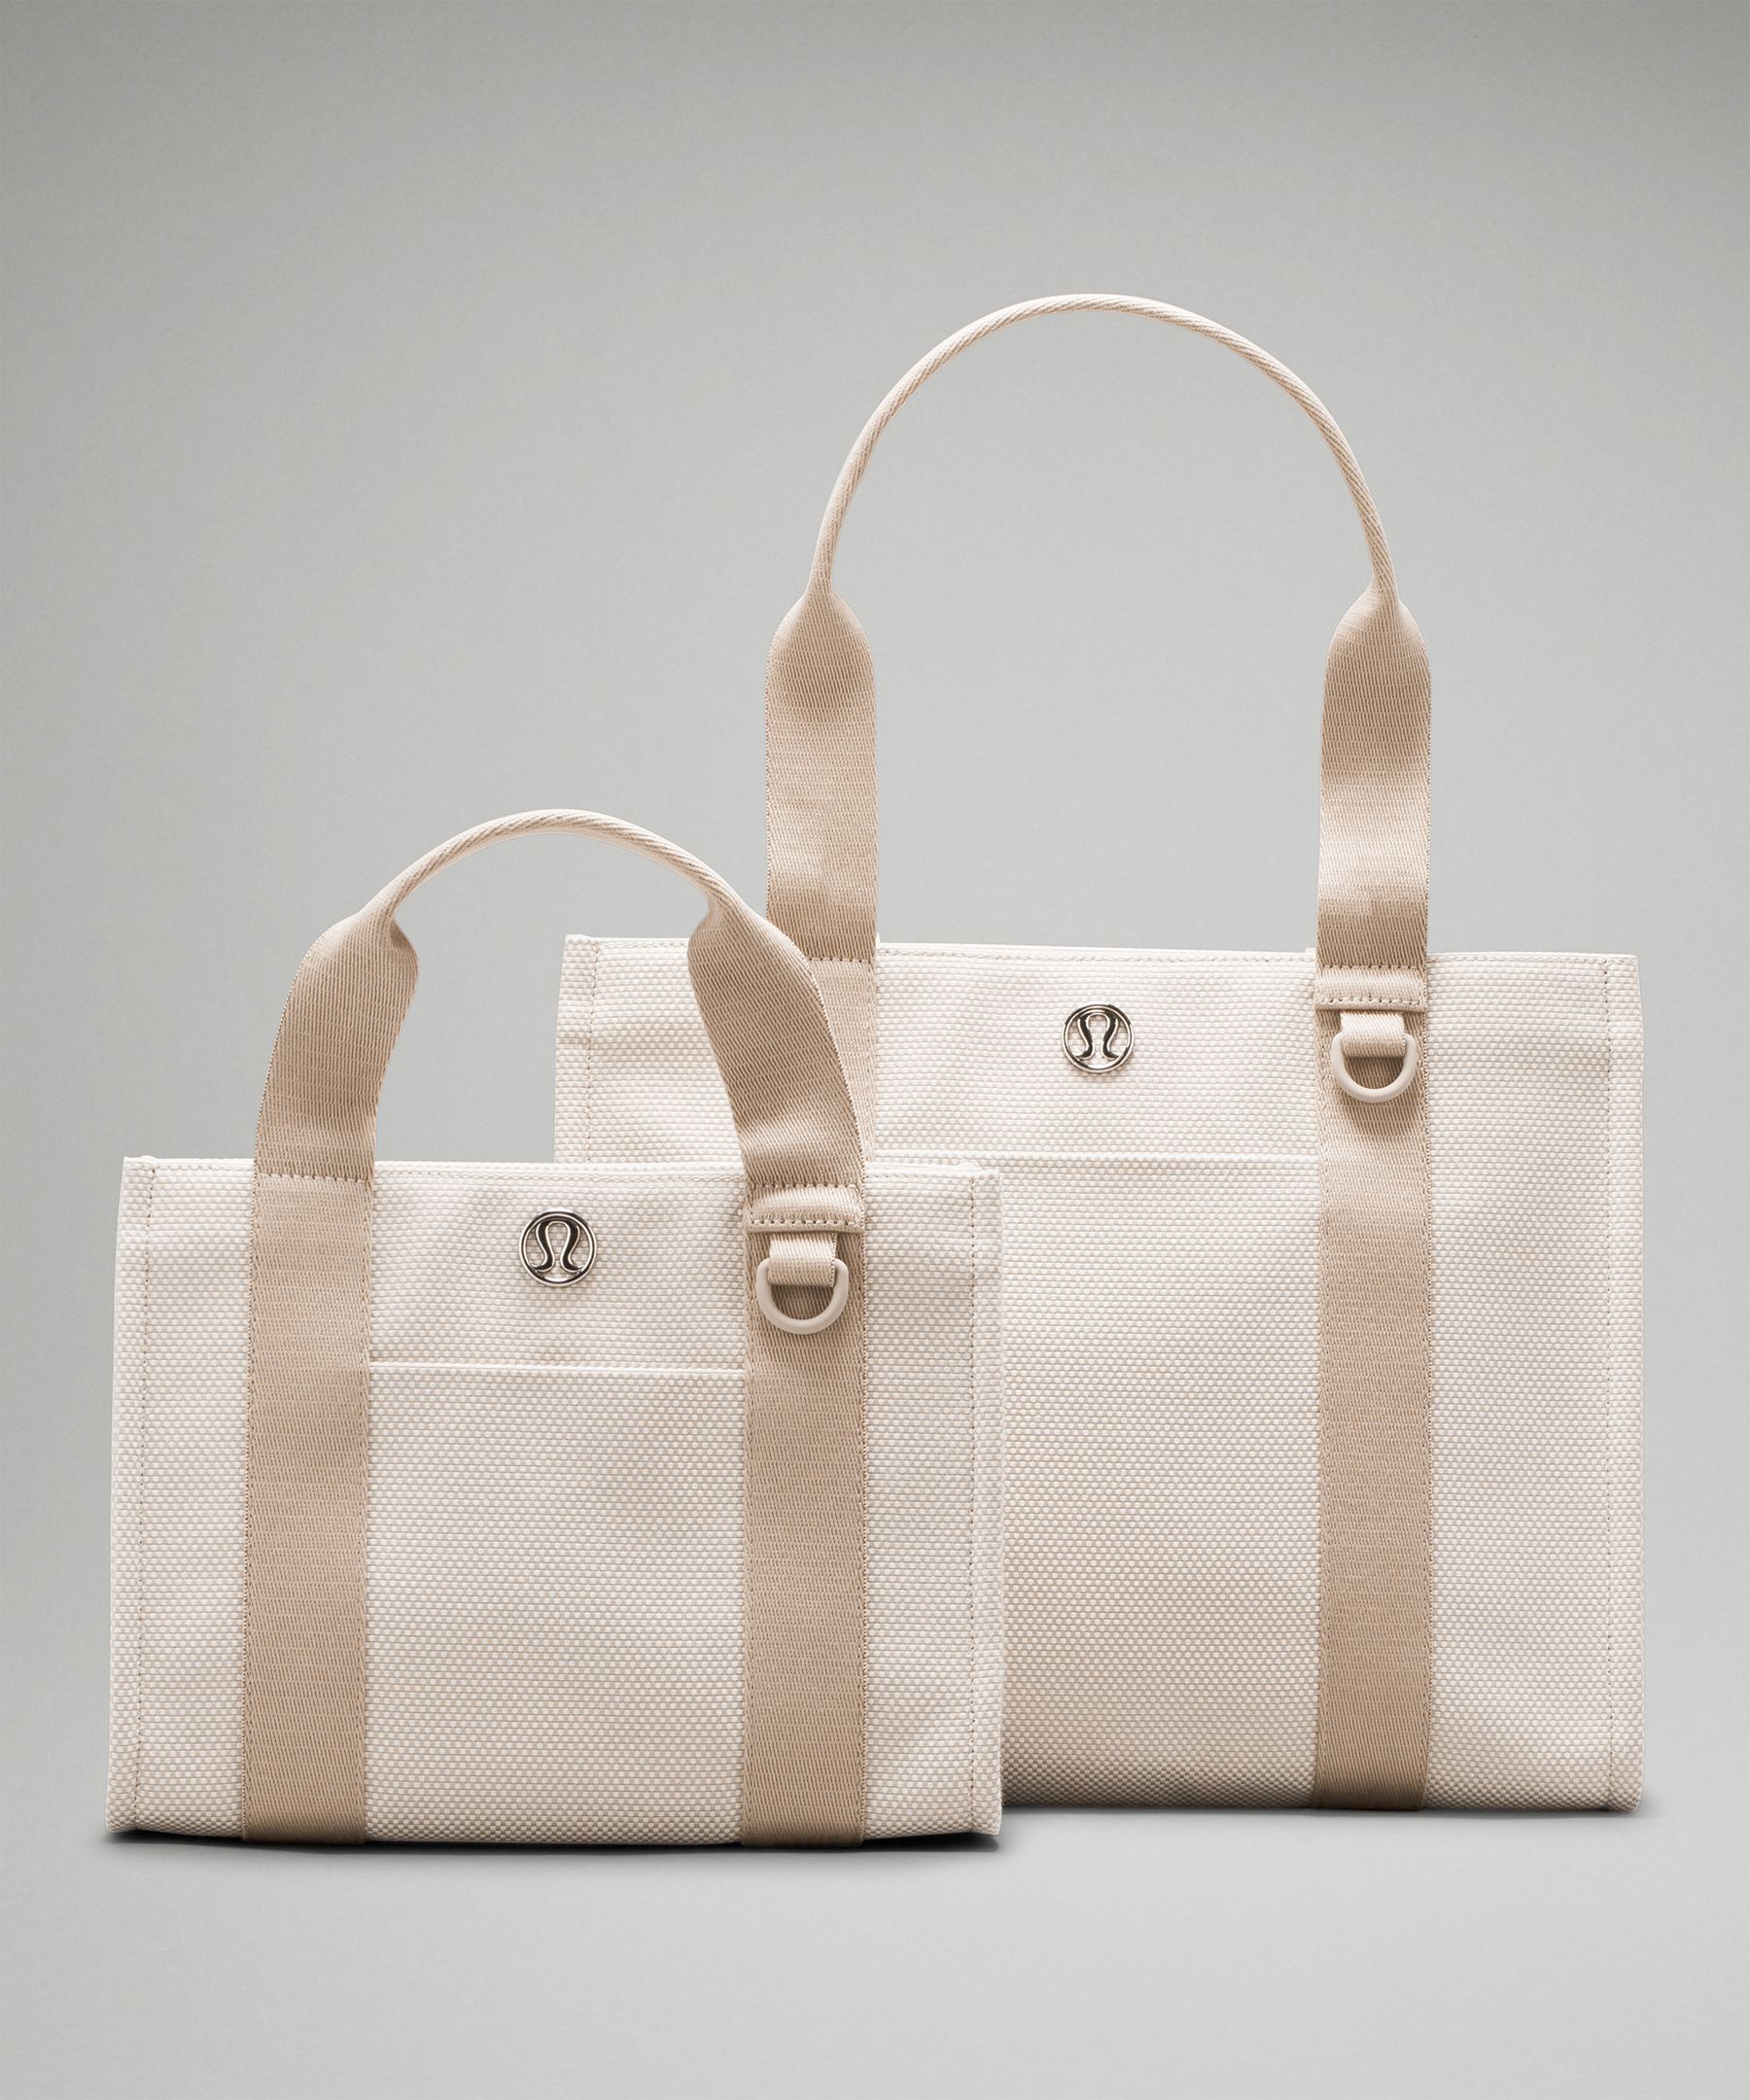 Lululemon athletica Two-Tone Canvas Tote Bag *Mini 4.5L